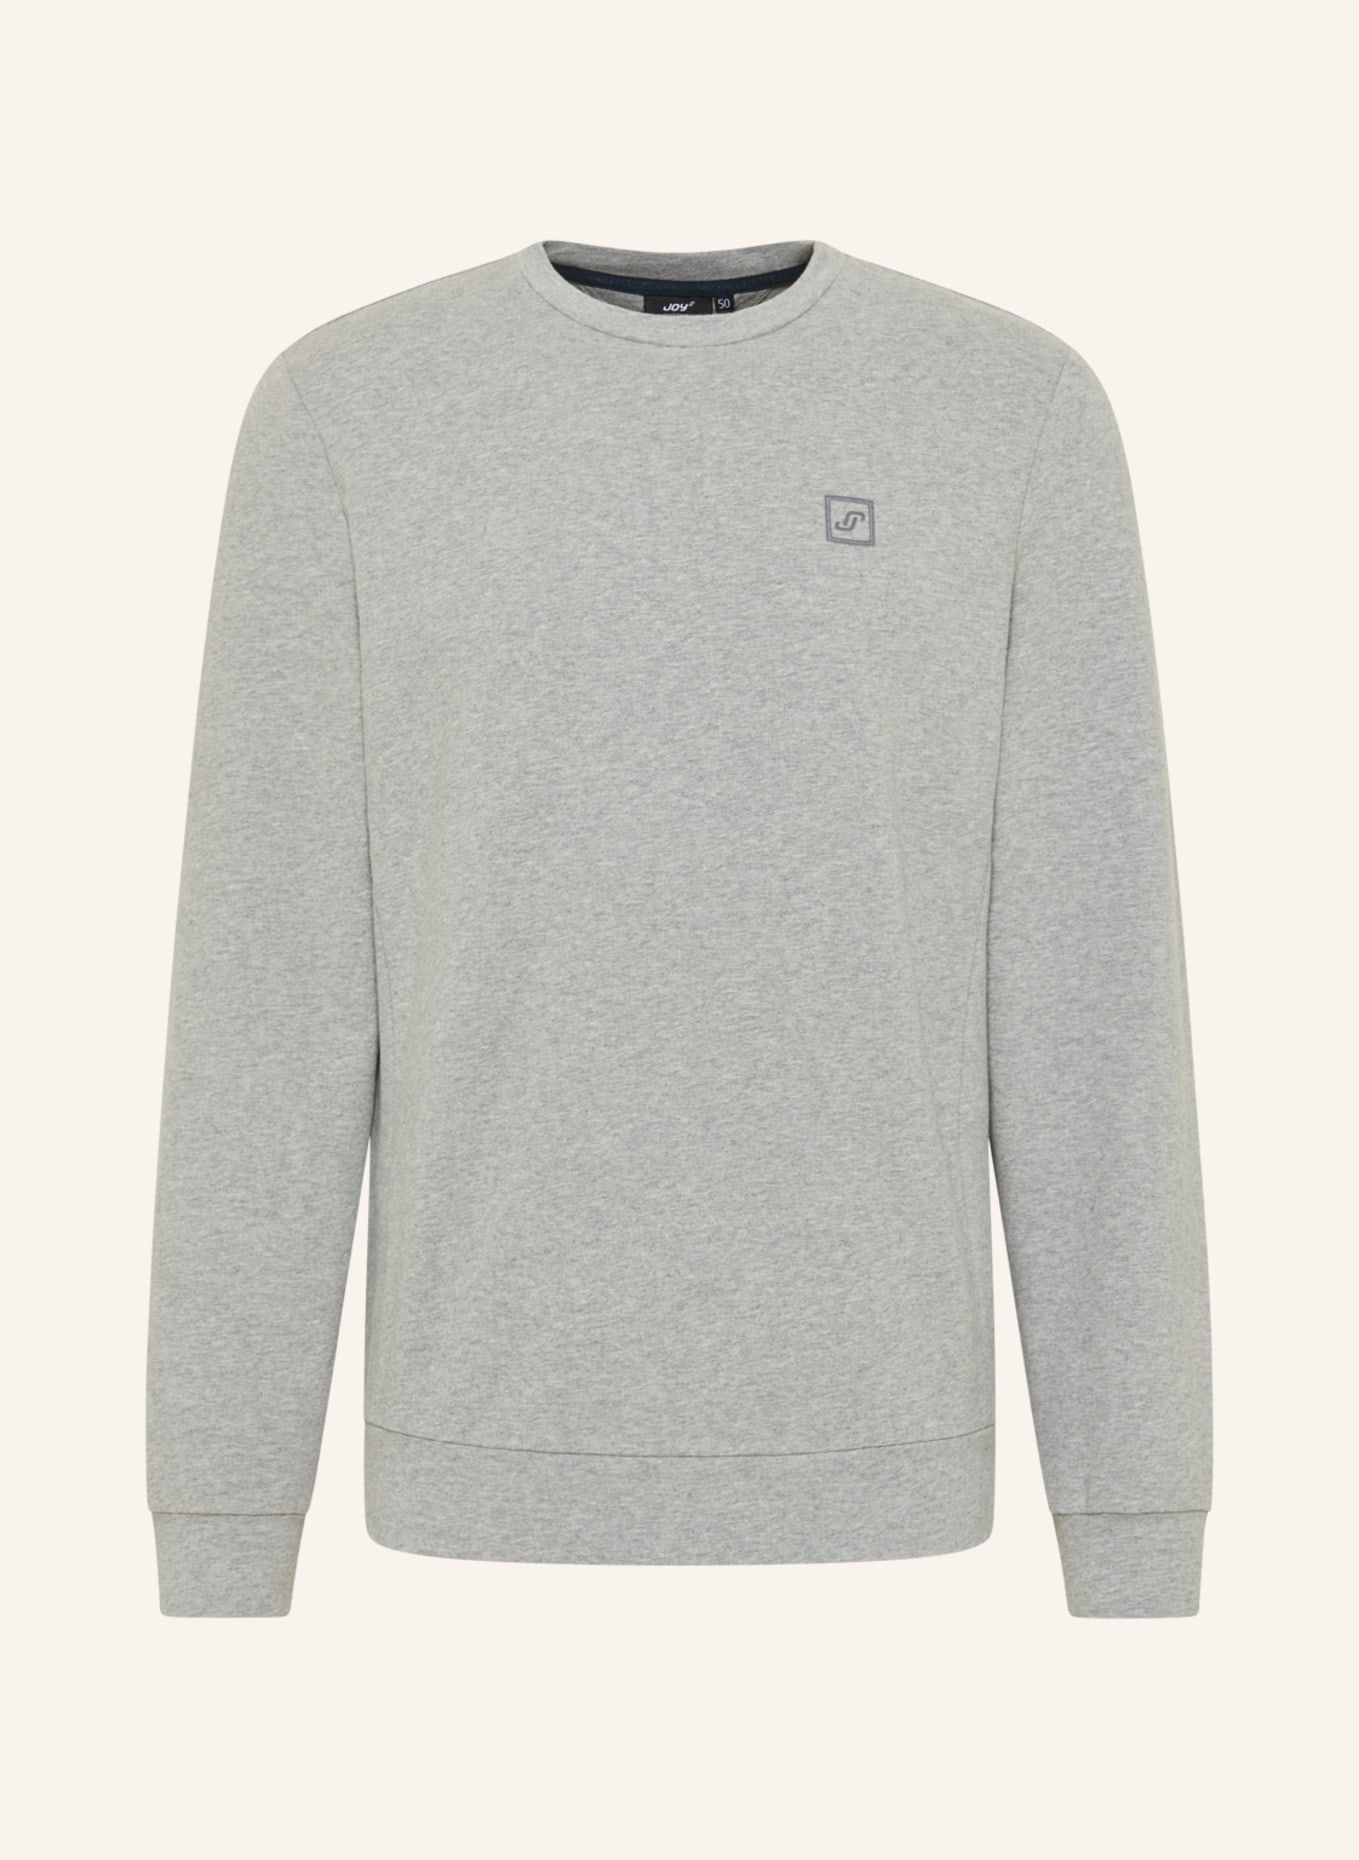 JOY sportswear Sweatshirt MICHA, Farbe: GRAU (Bild 1)